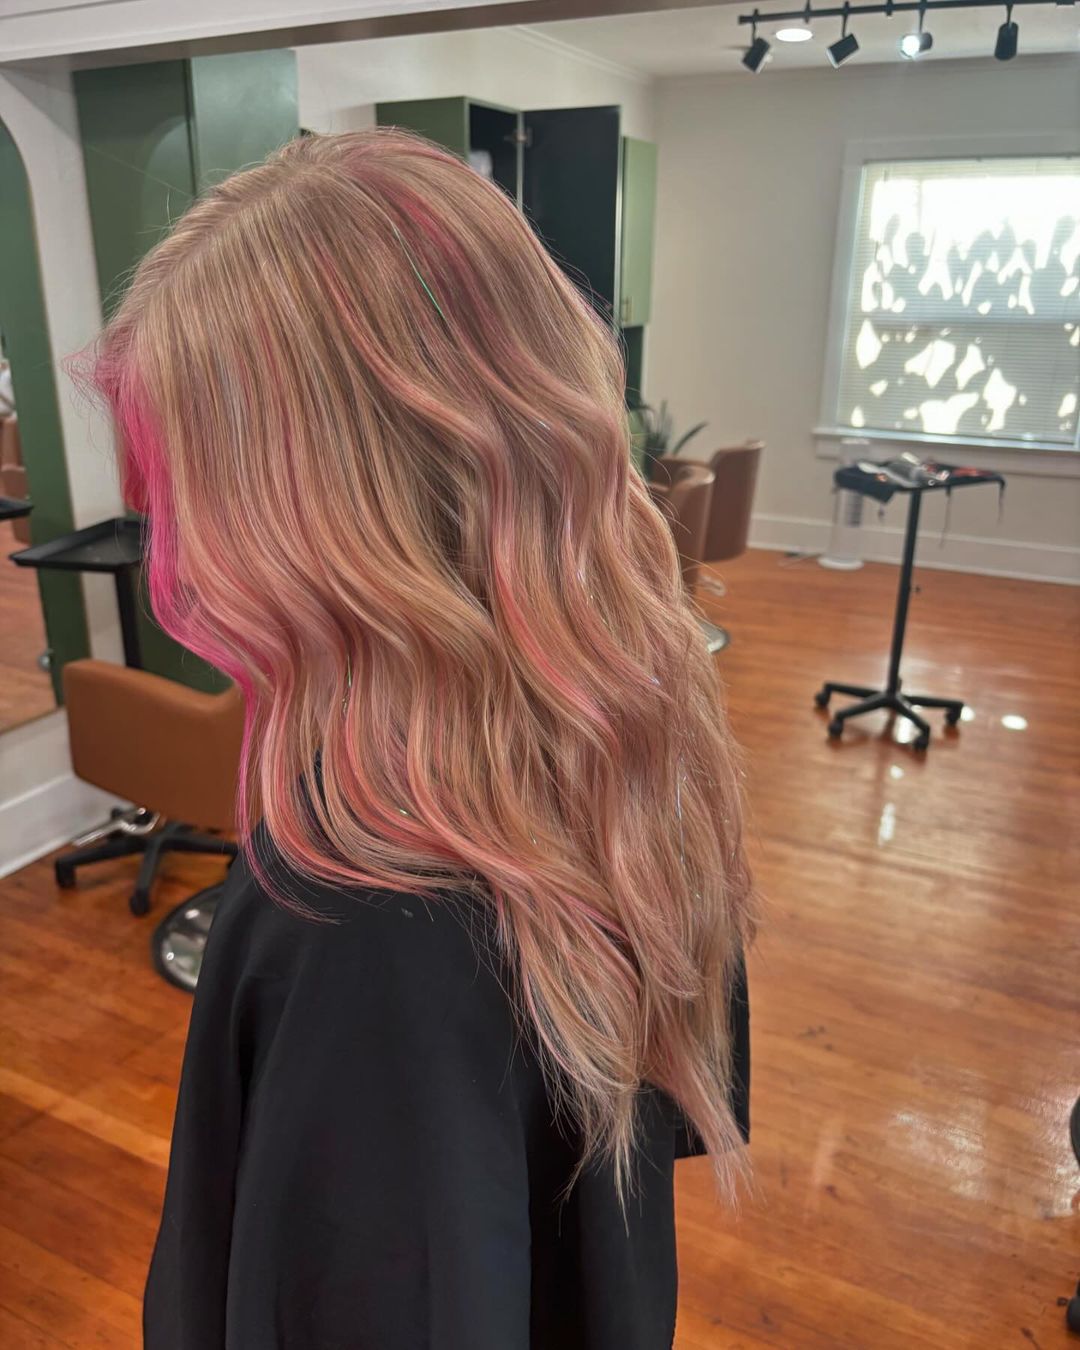 subtle pink highlights on blonde hair